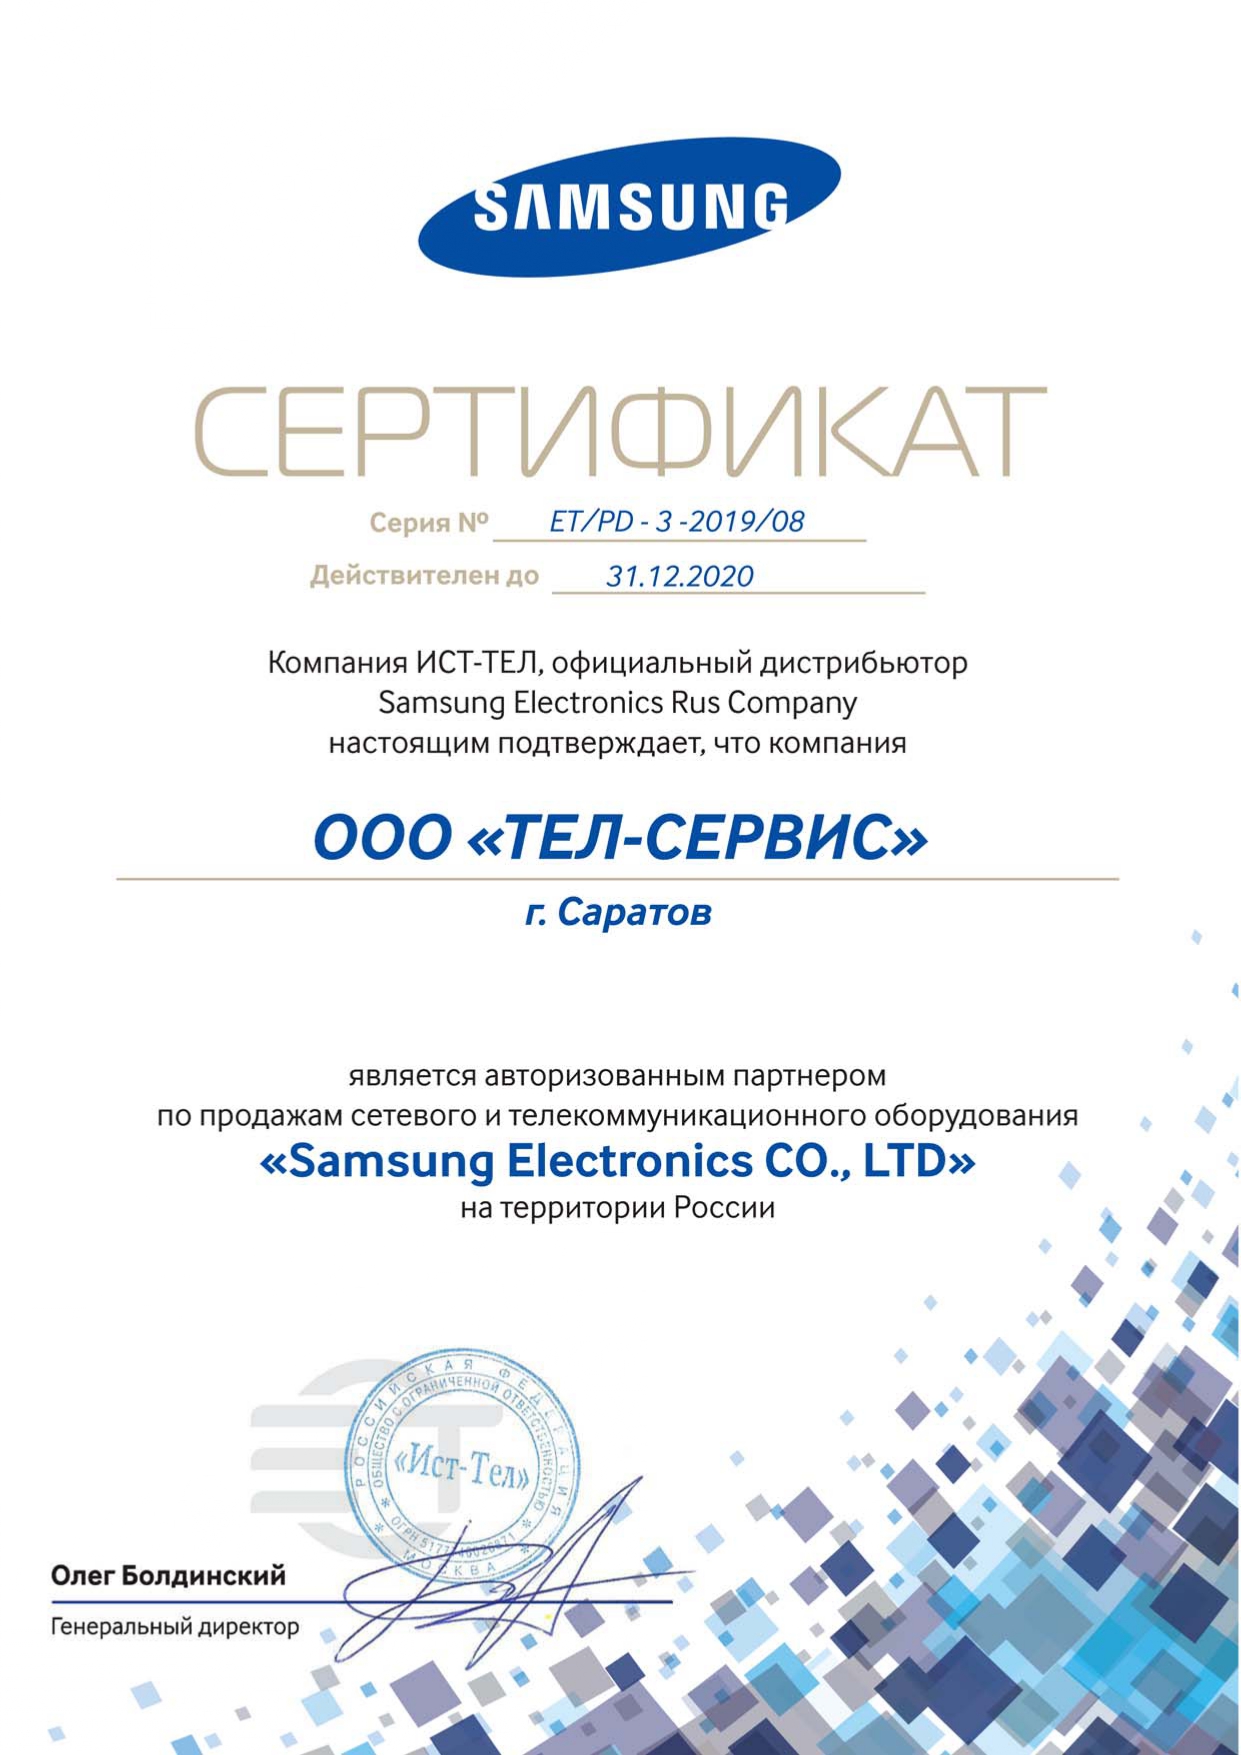 Сертификат от Samsung до 2020